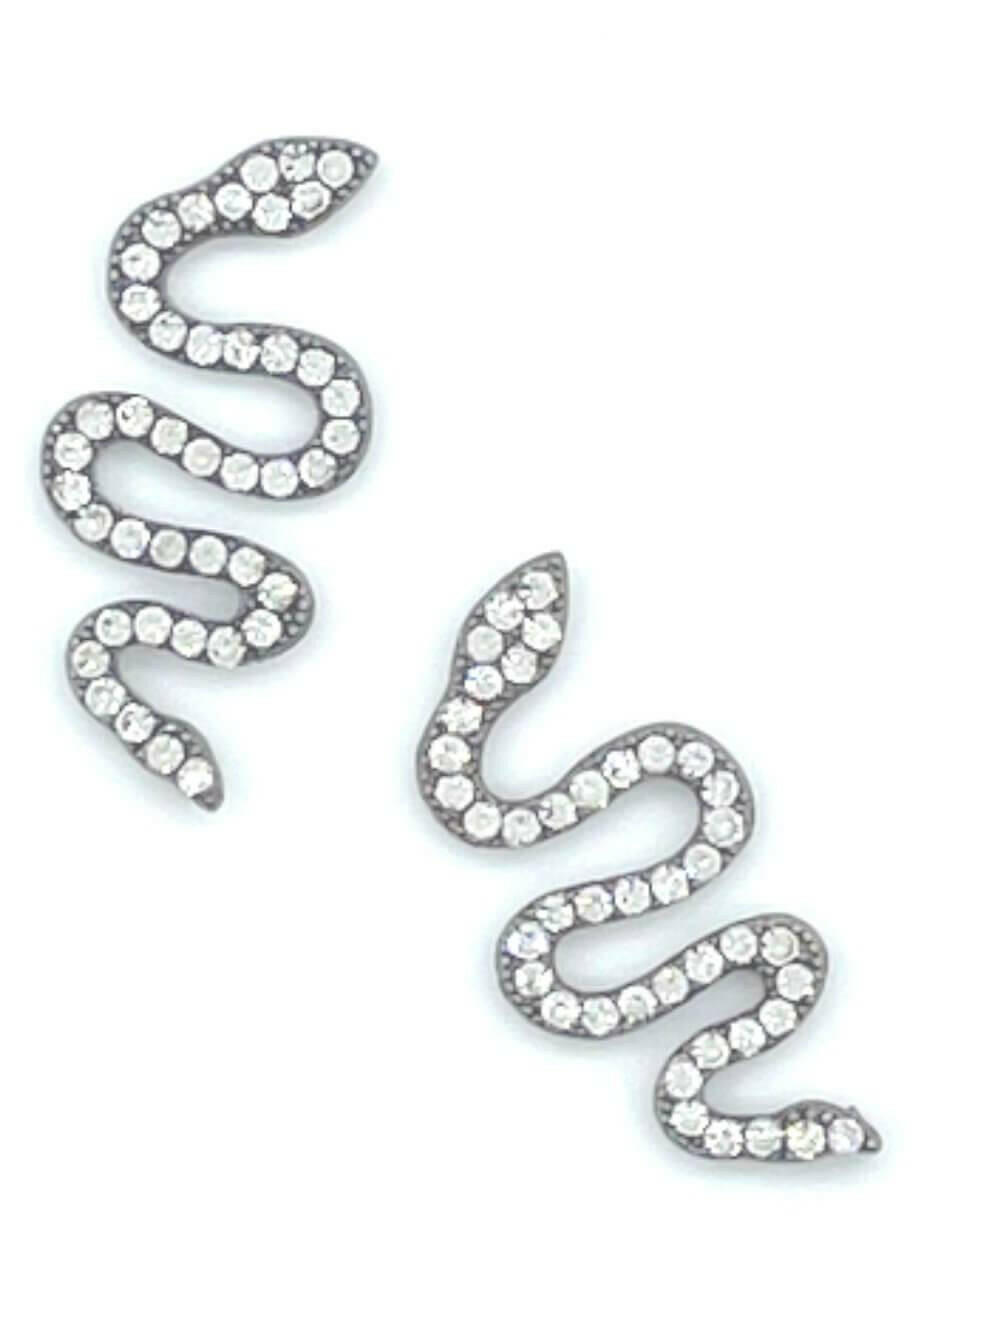 Large Snake Charms (BLACK), Snacks by Hazel & Dot - thePINKchair.ca - Nail Art - thePINKchair nail studio